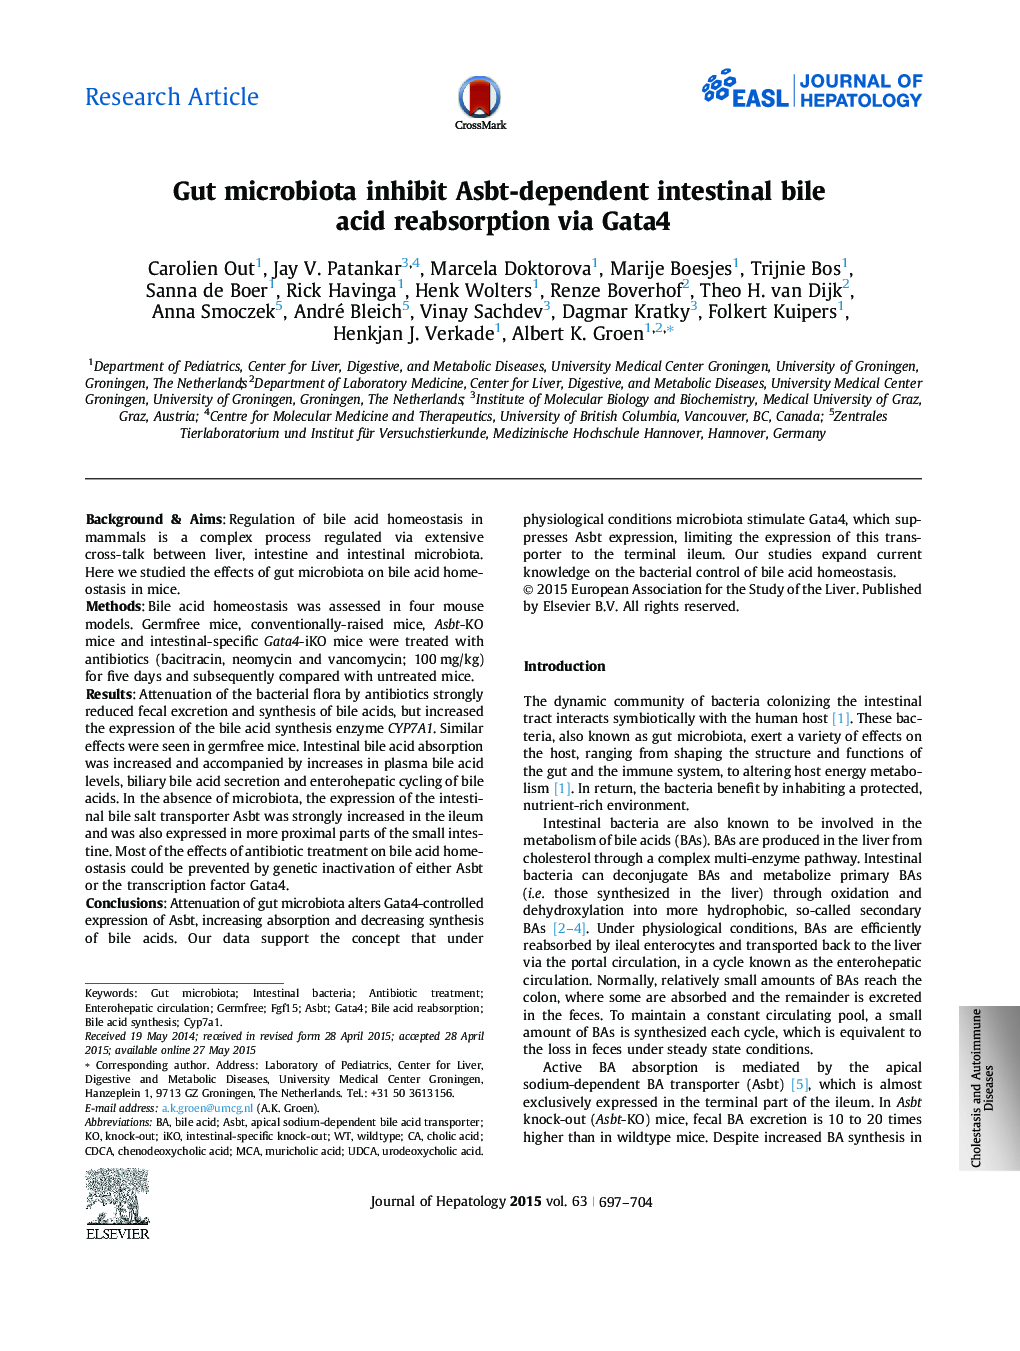 Research ArticleGut microbiota inhibit Asbt-dependent intestinal bile acid reabsorption via Gata4